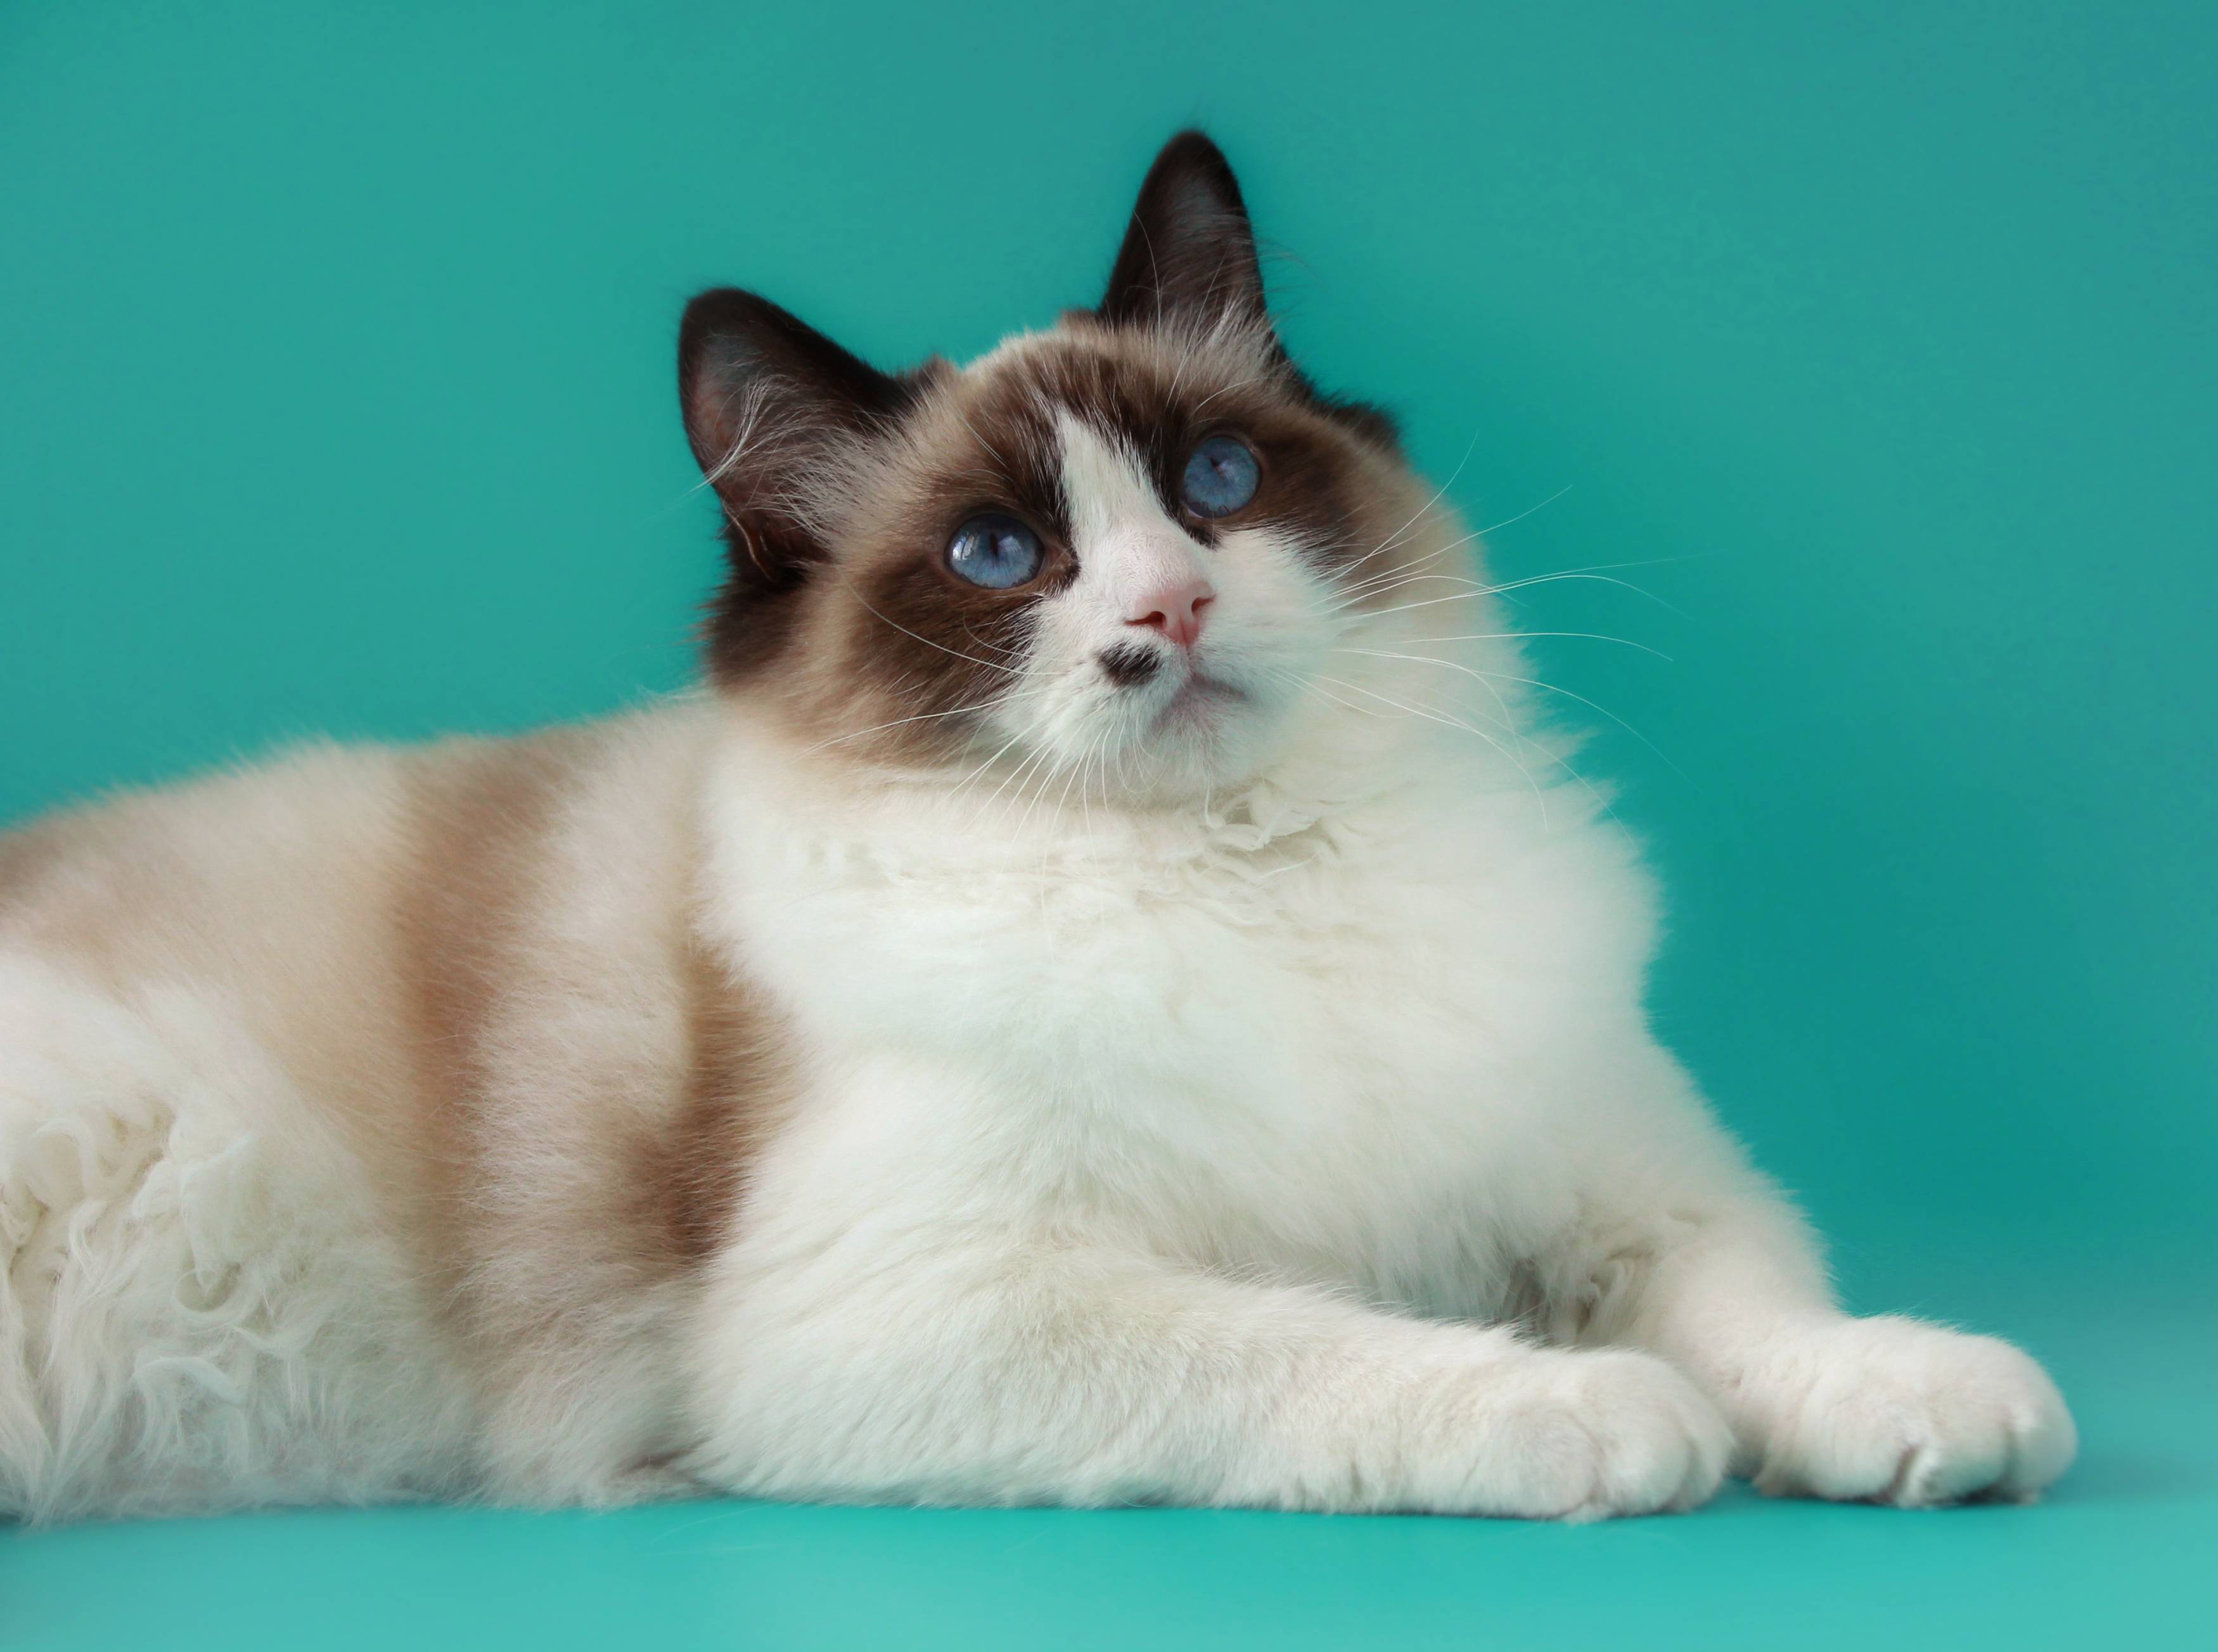 Рэгдолл кошка: фото, видео, о породе, характере, здоровье